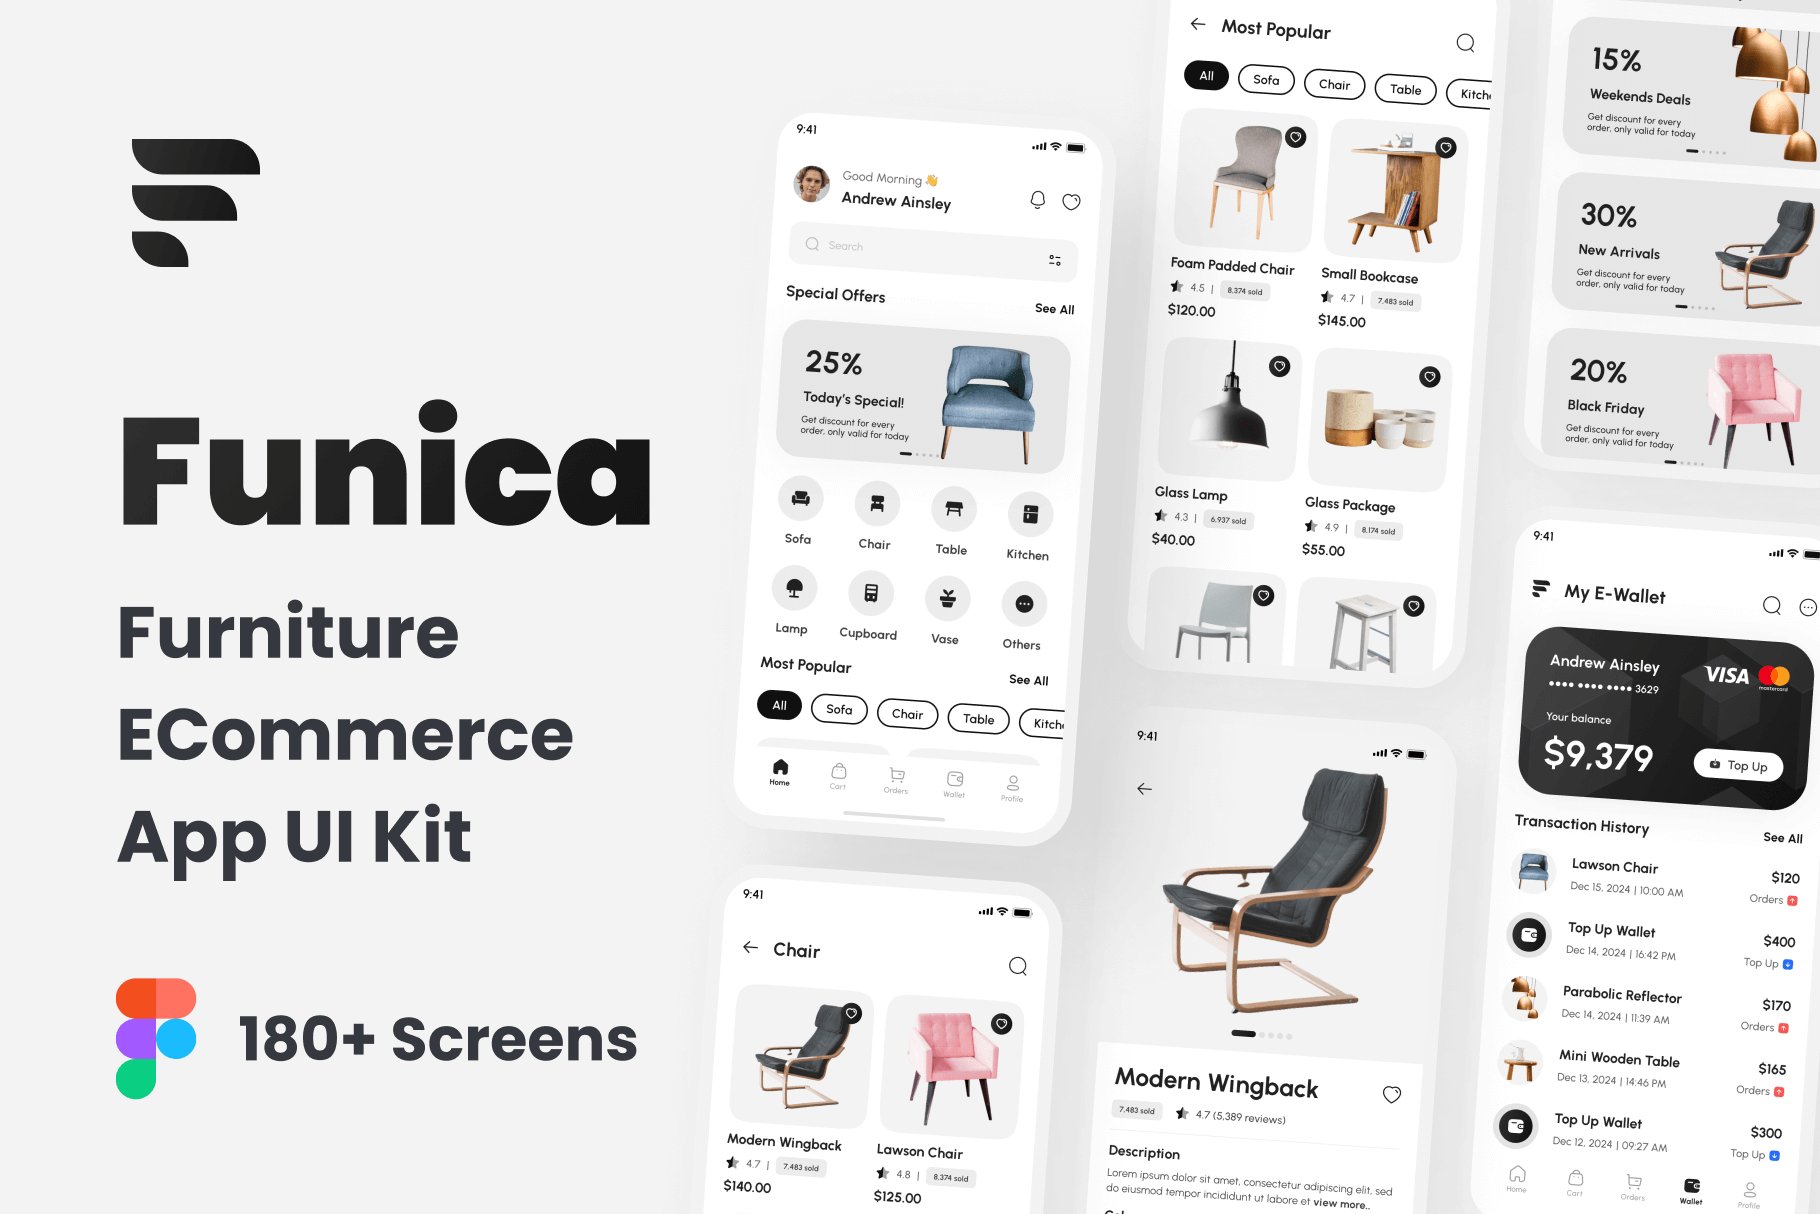 Furniture E-Commerce App UI Kit cover image.